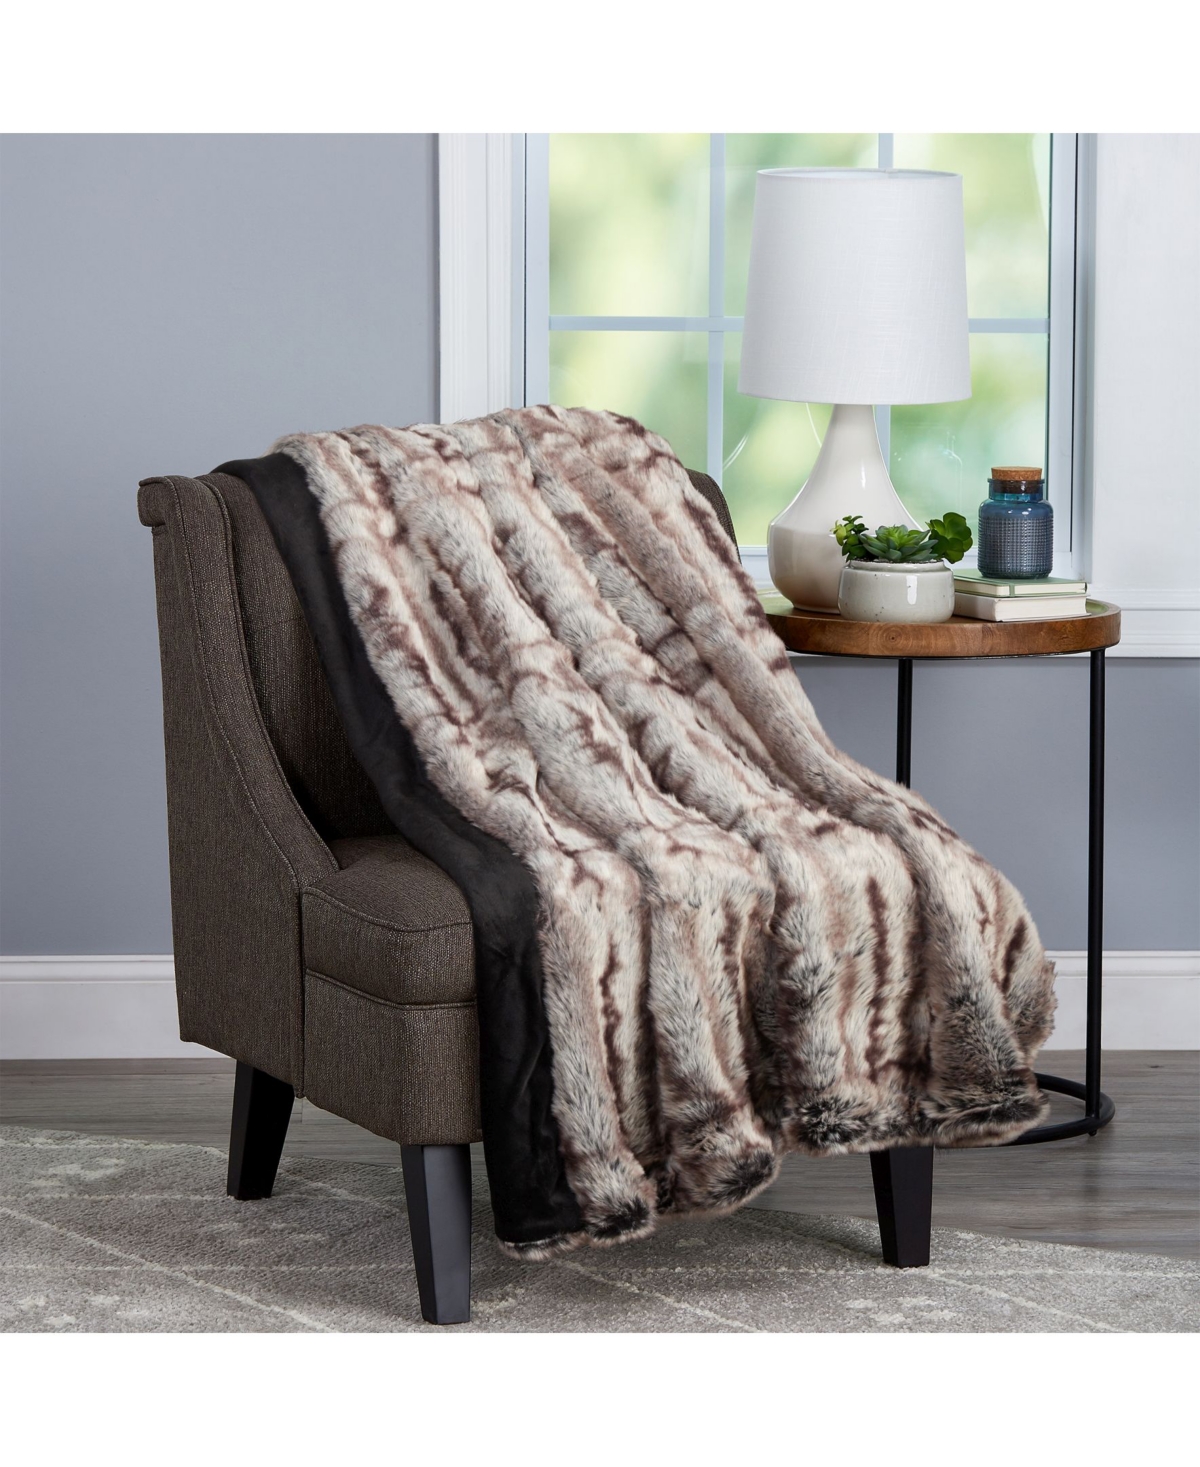 Baldwin Home Oversized Soft Fluffy Vintage-Look Throw Blanket